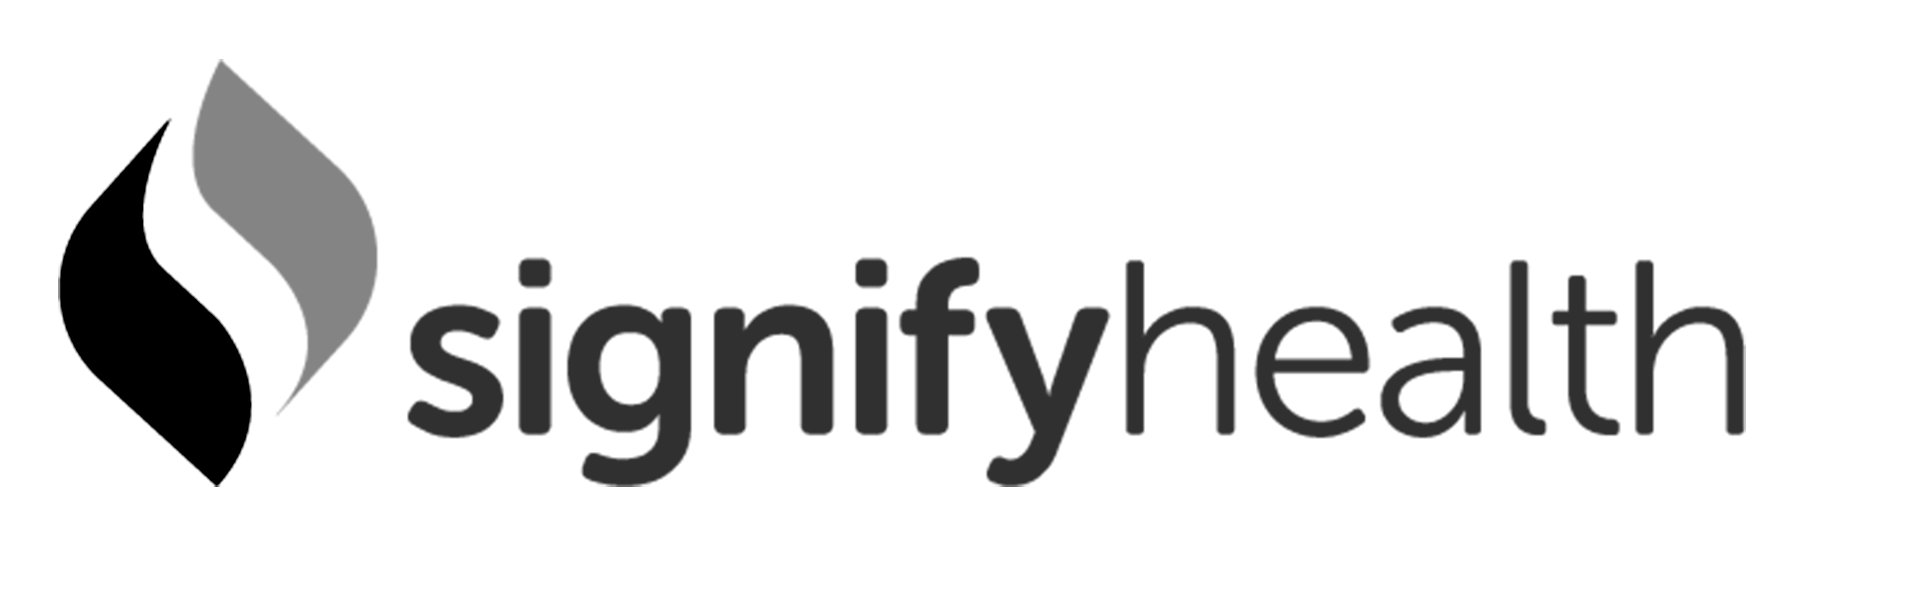 Signify Health image logo